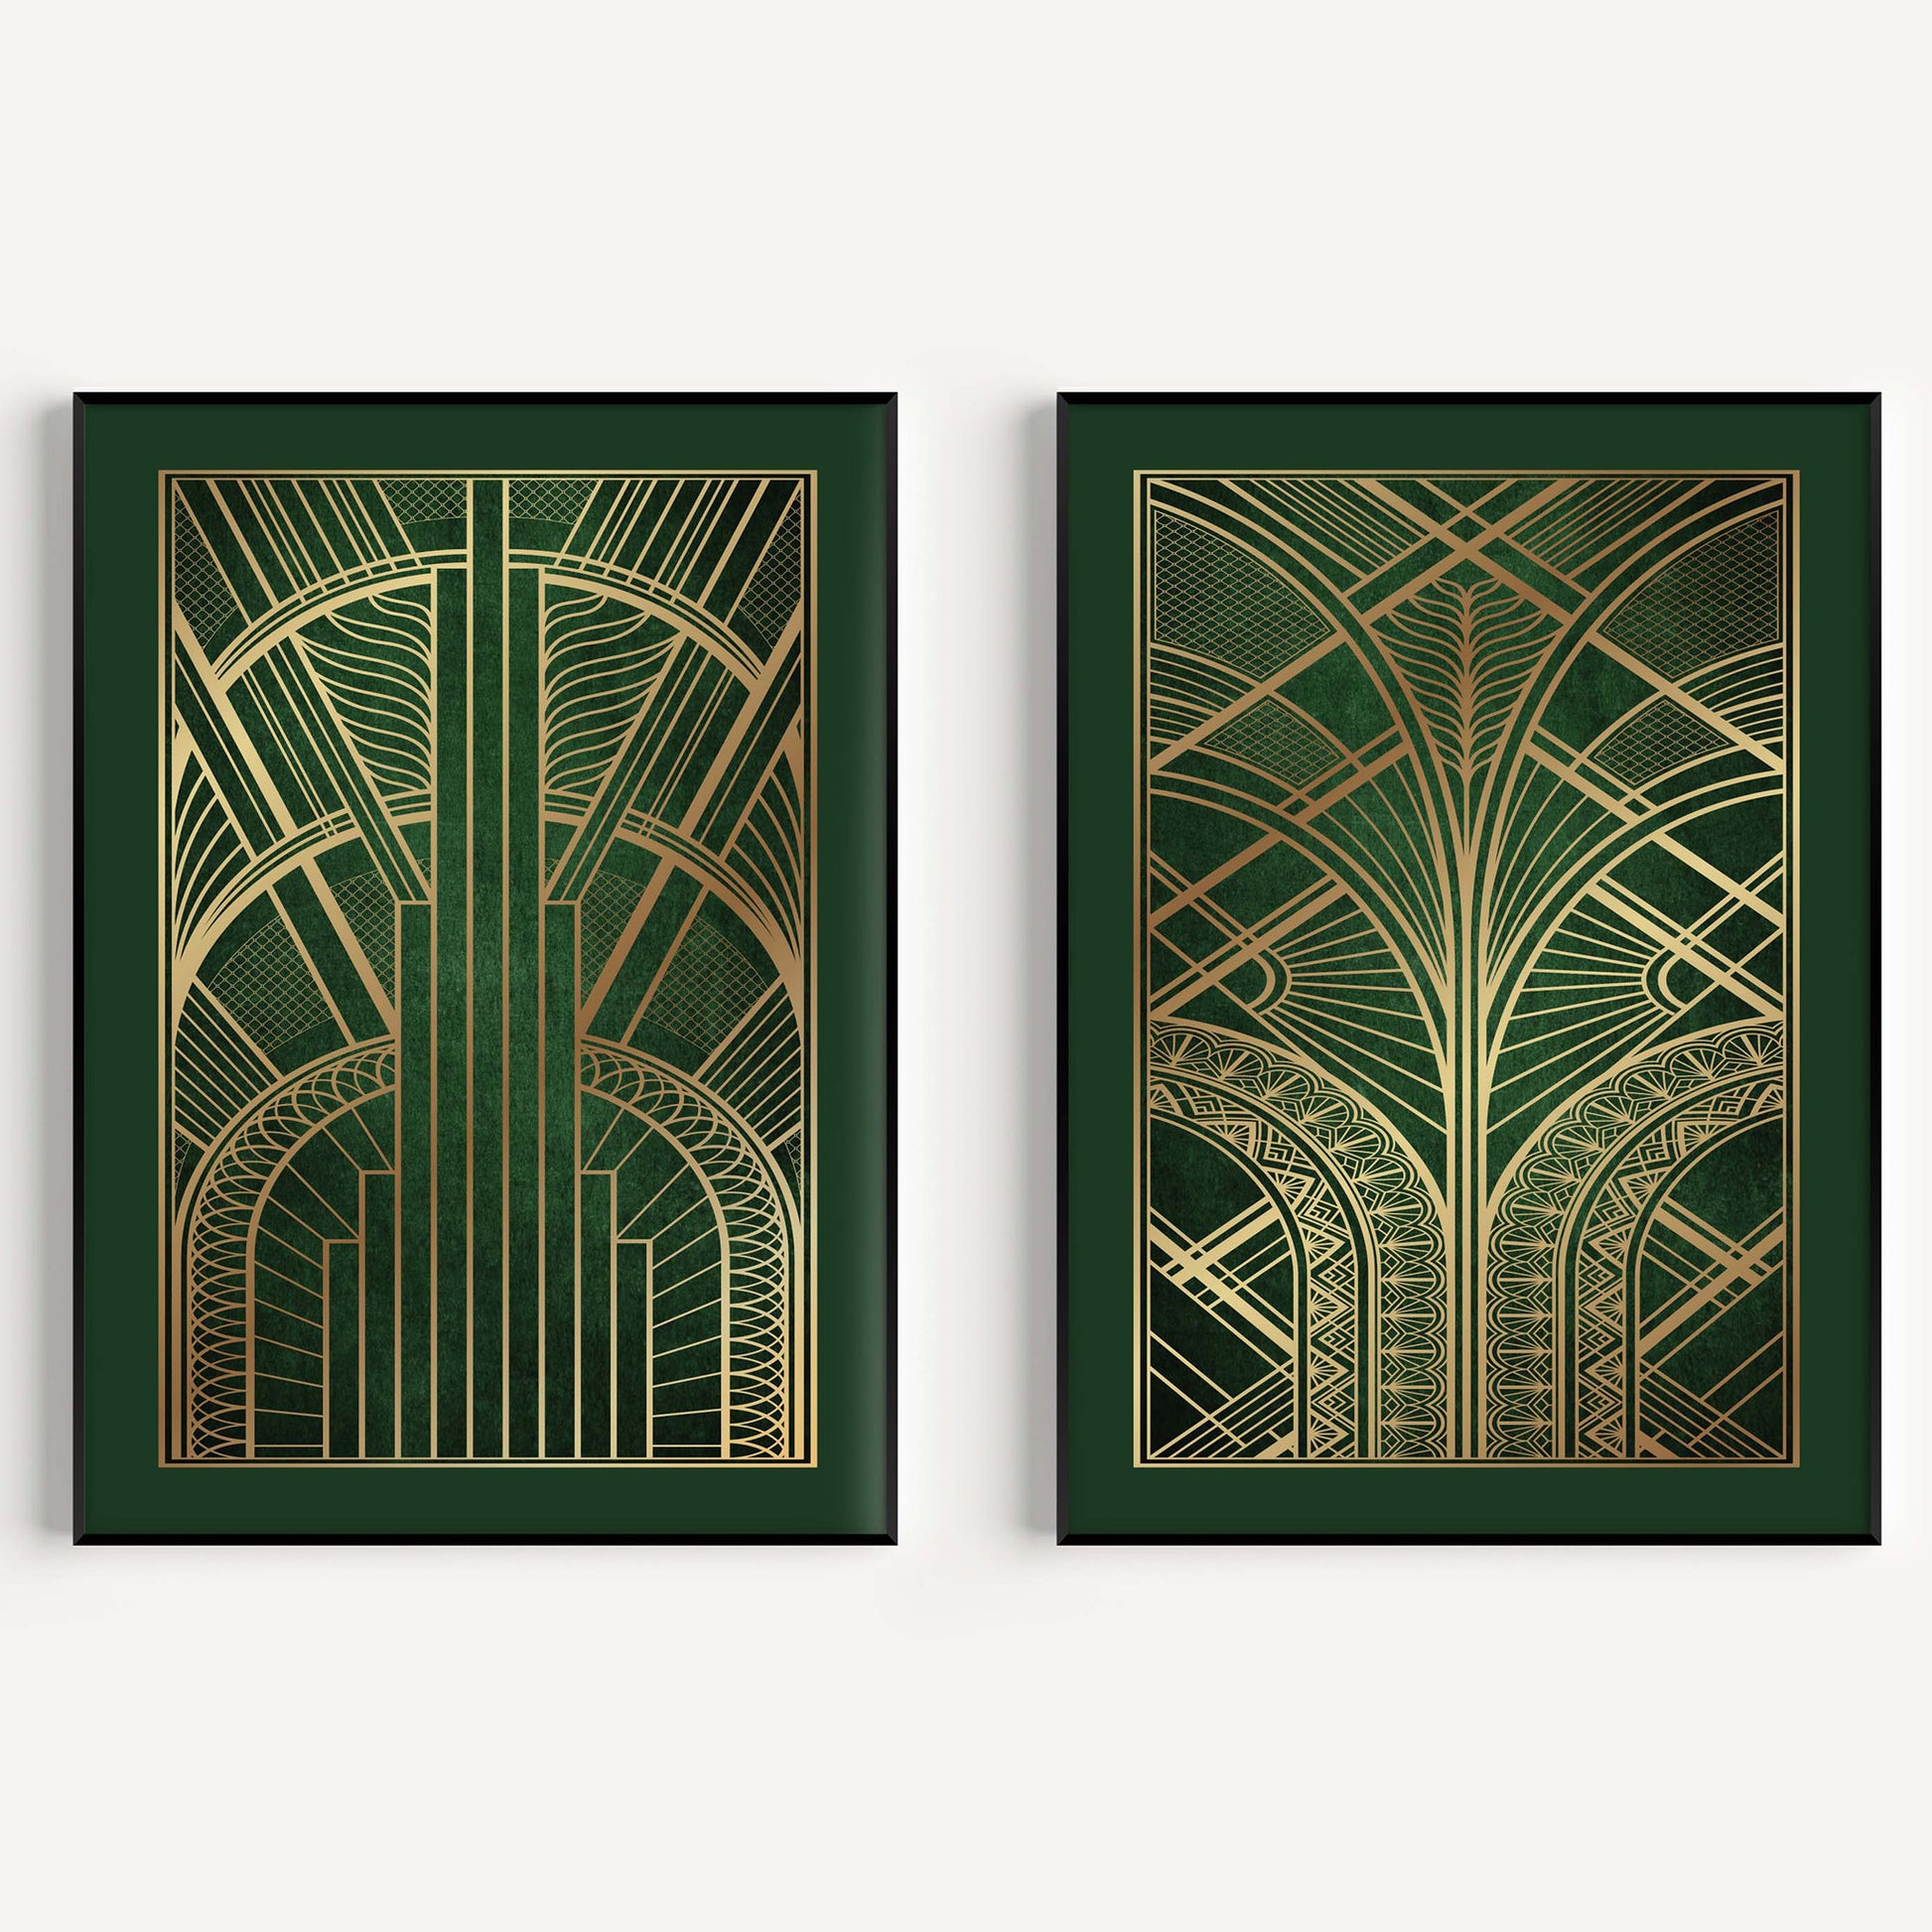 Green art deco prints in a set of 2